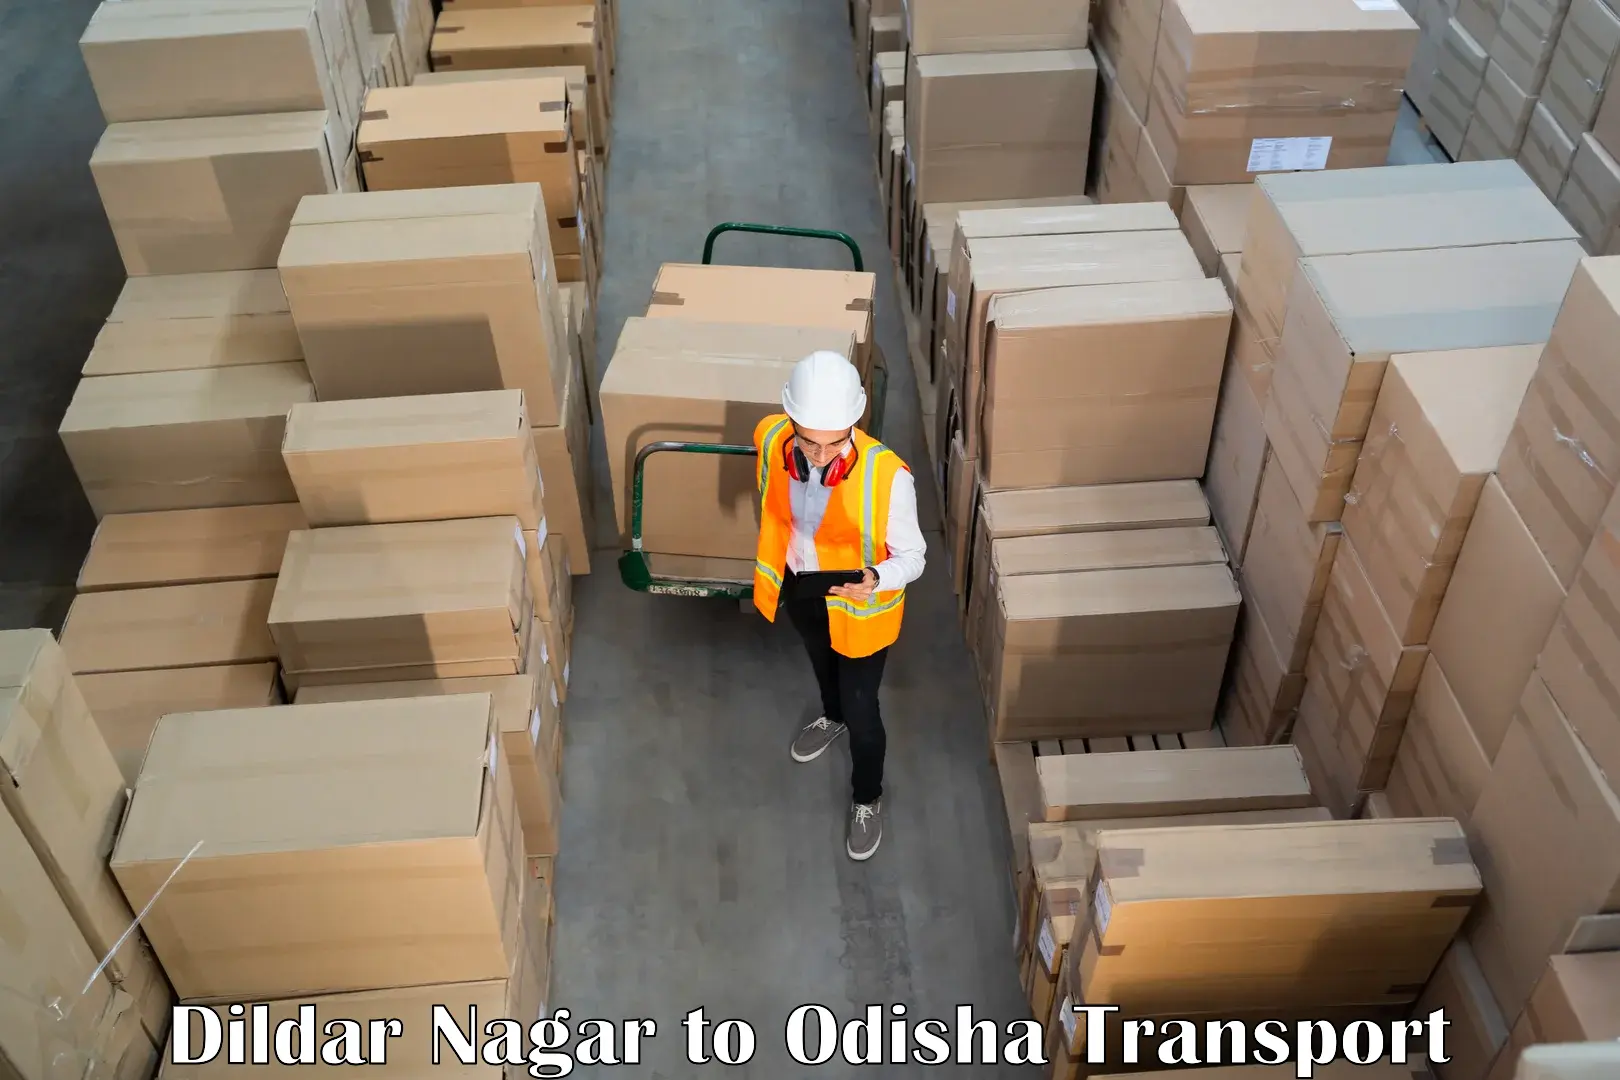 Truck transport companies in India Dildar Nagar to Chatrapur